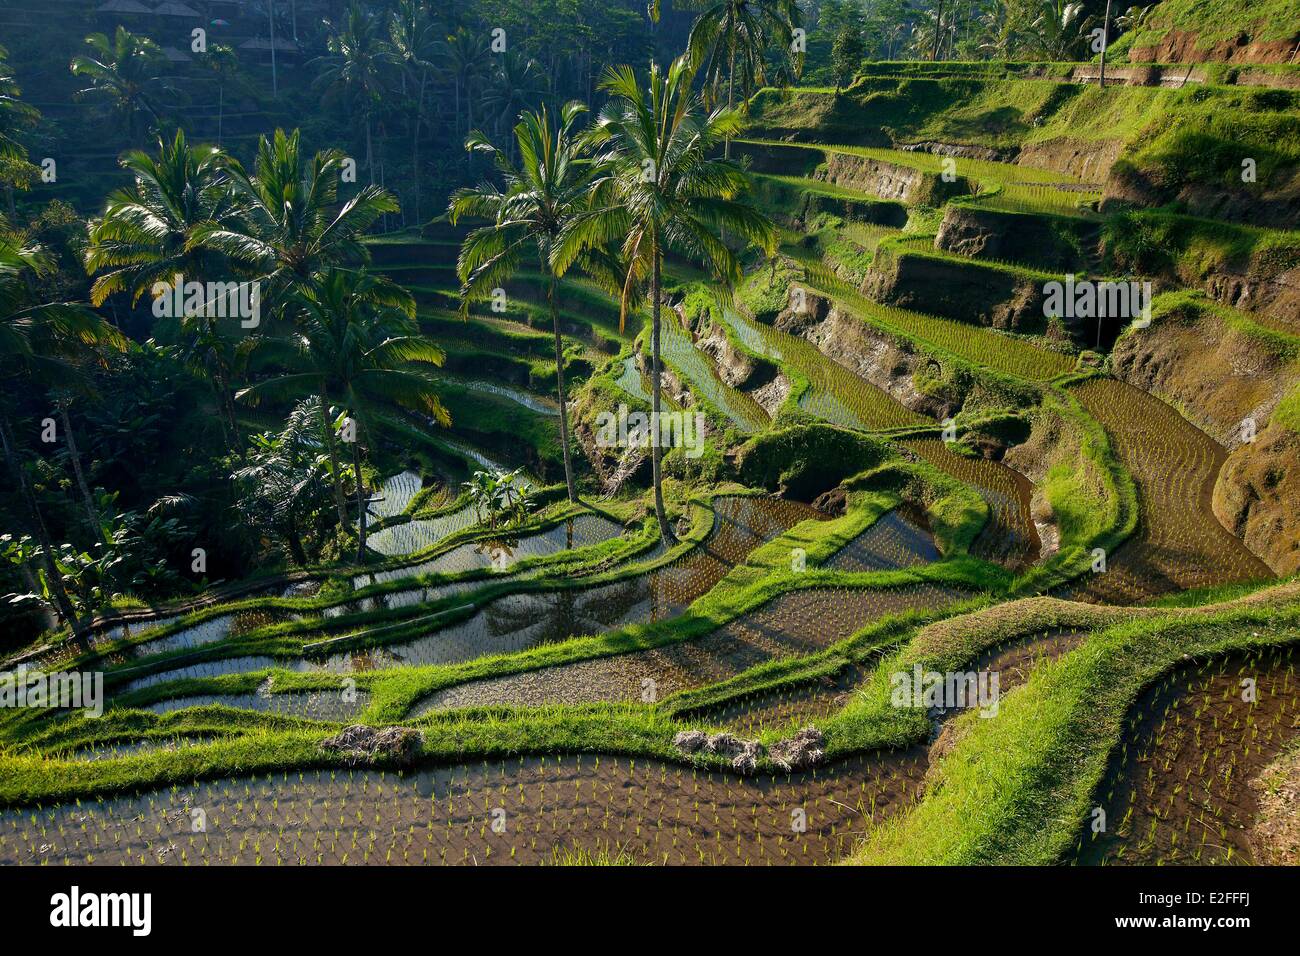 Indonesia, Bali, near Ubud, Tegalalang, rice field Stock Photo